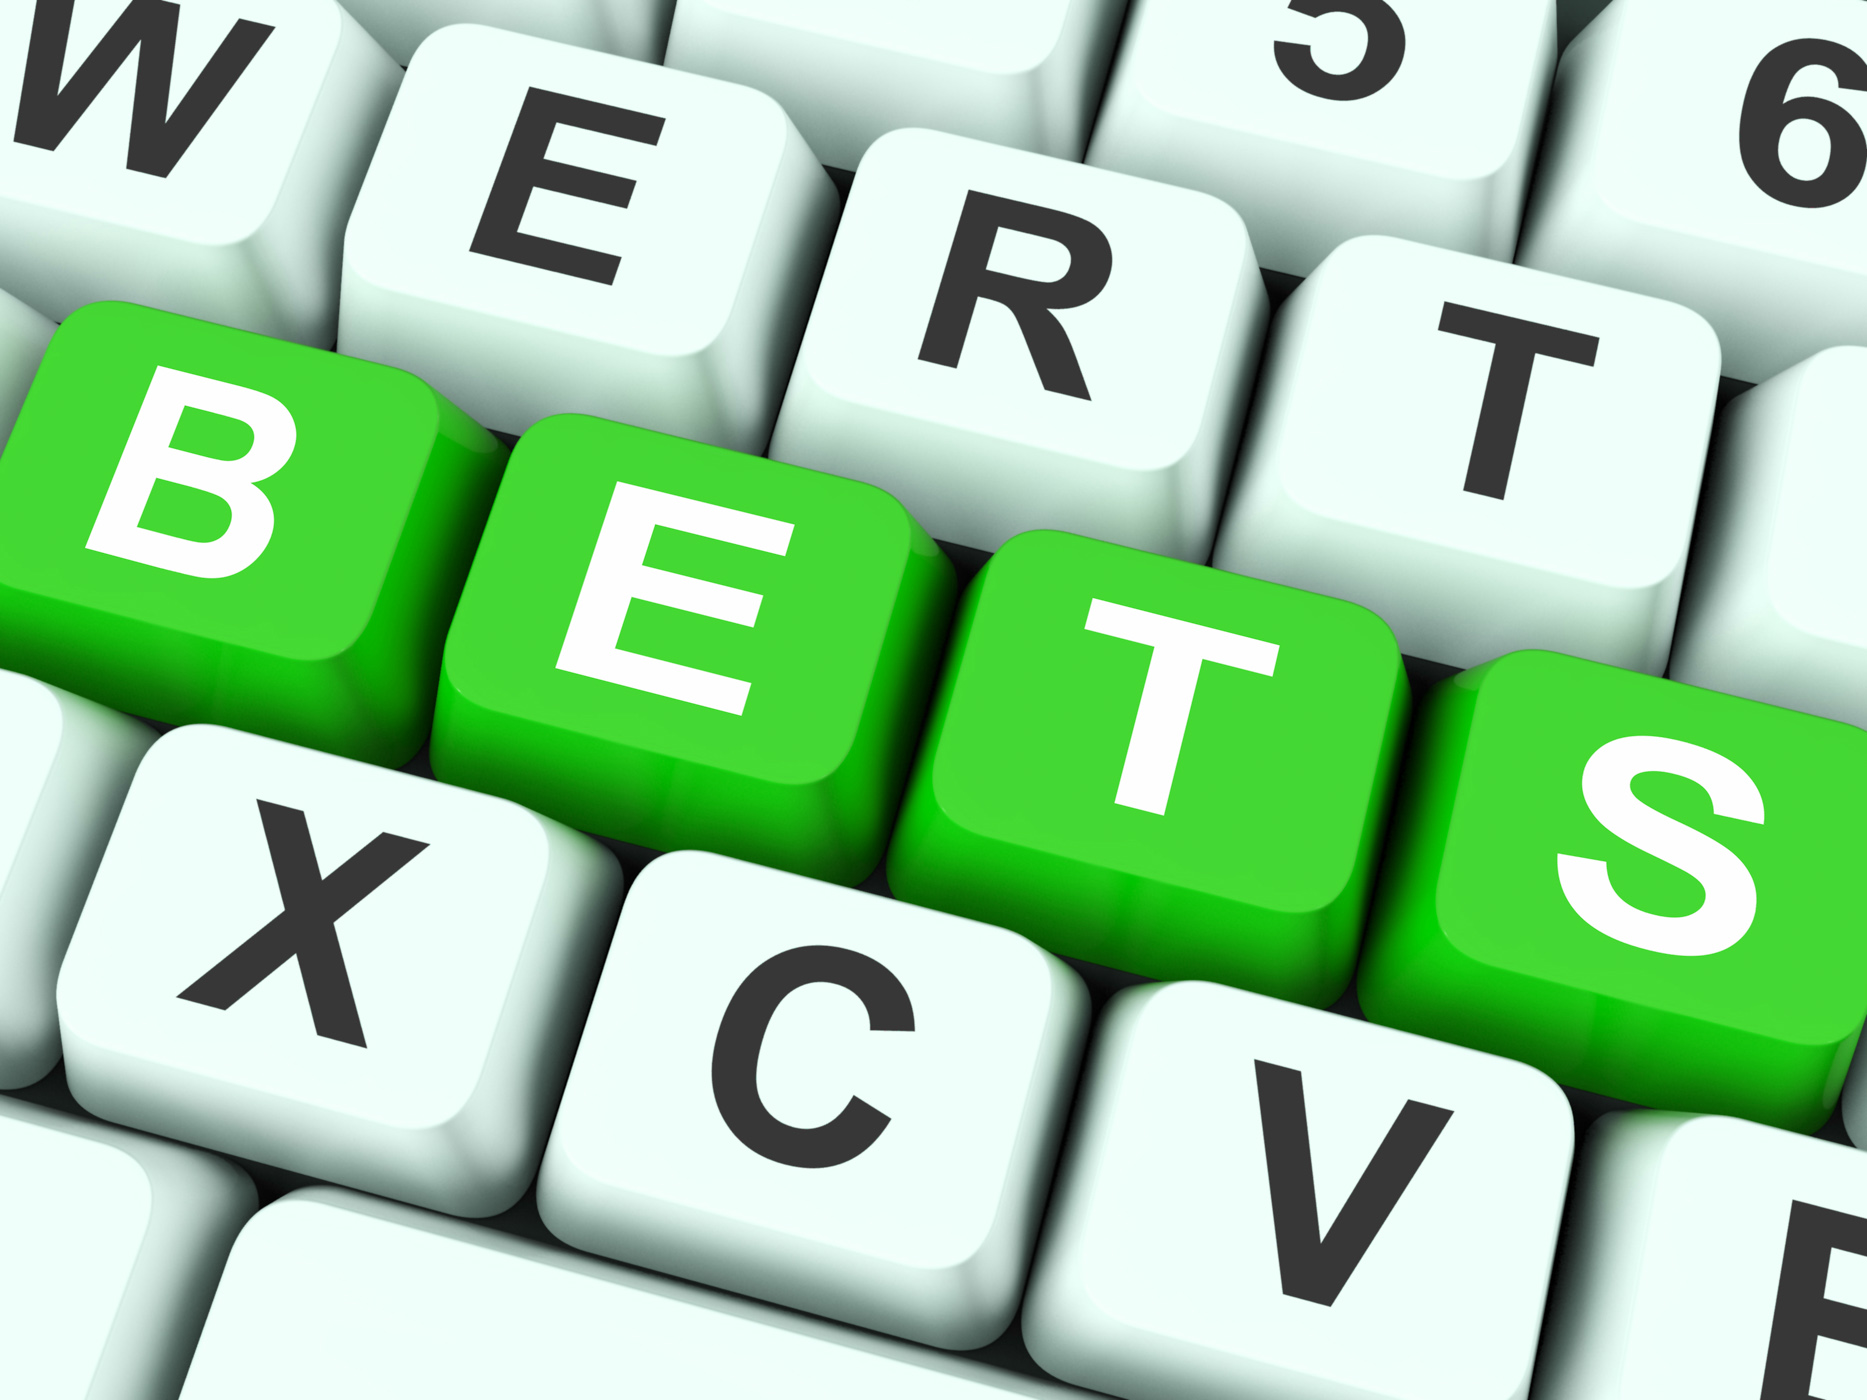 Bets Keys Show Online Or Internet Betting, Bet, Betting, Gamble, Gambler, HQ Photo